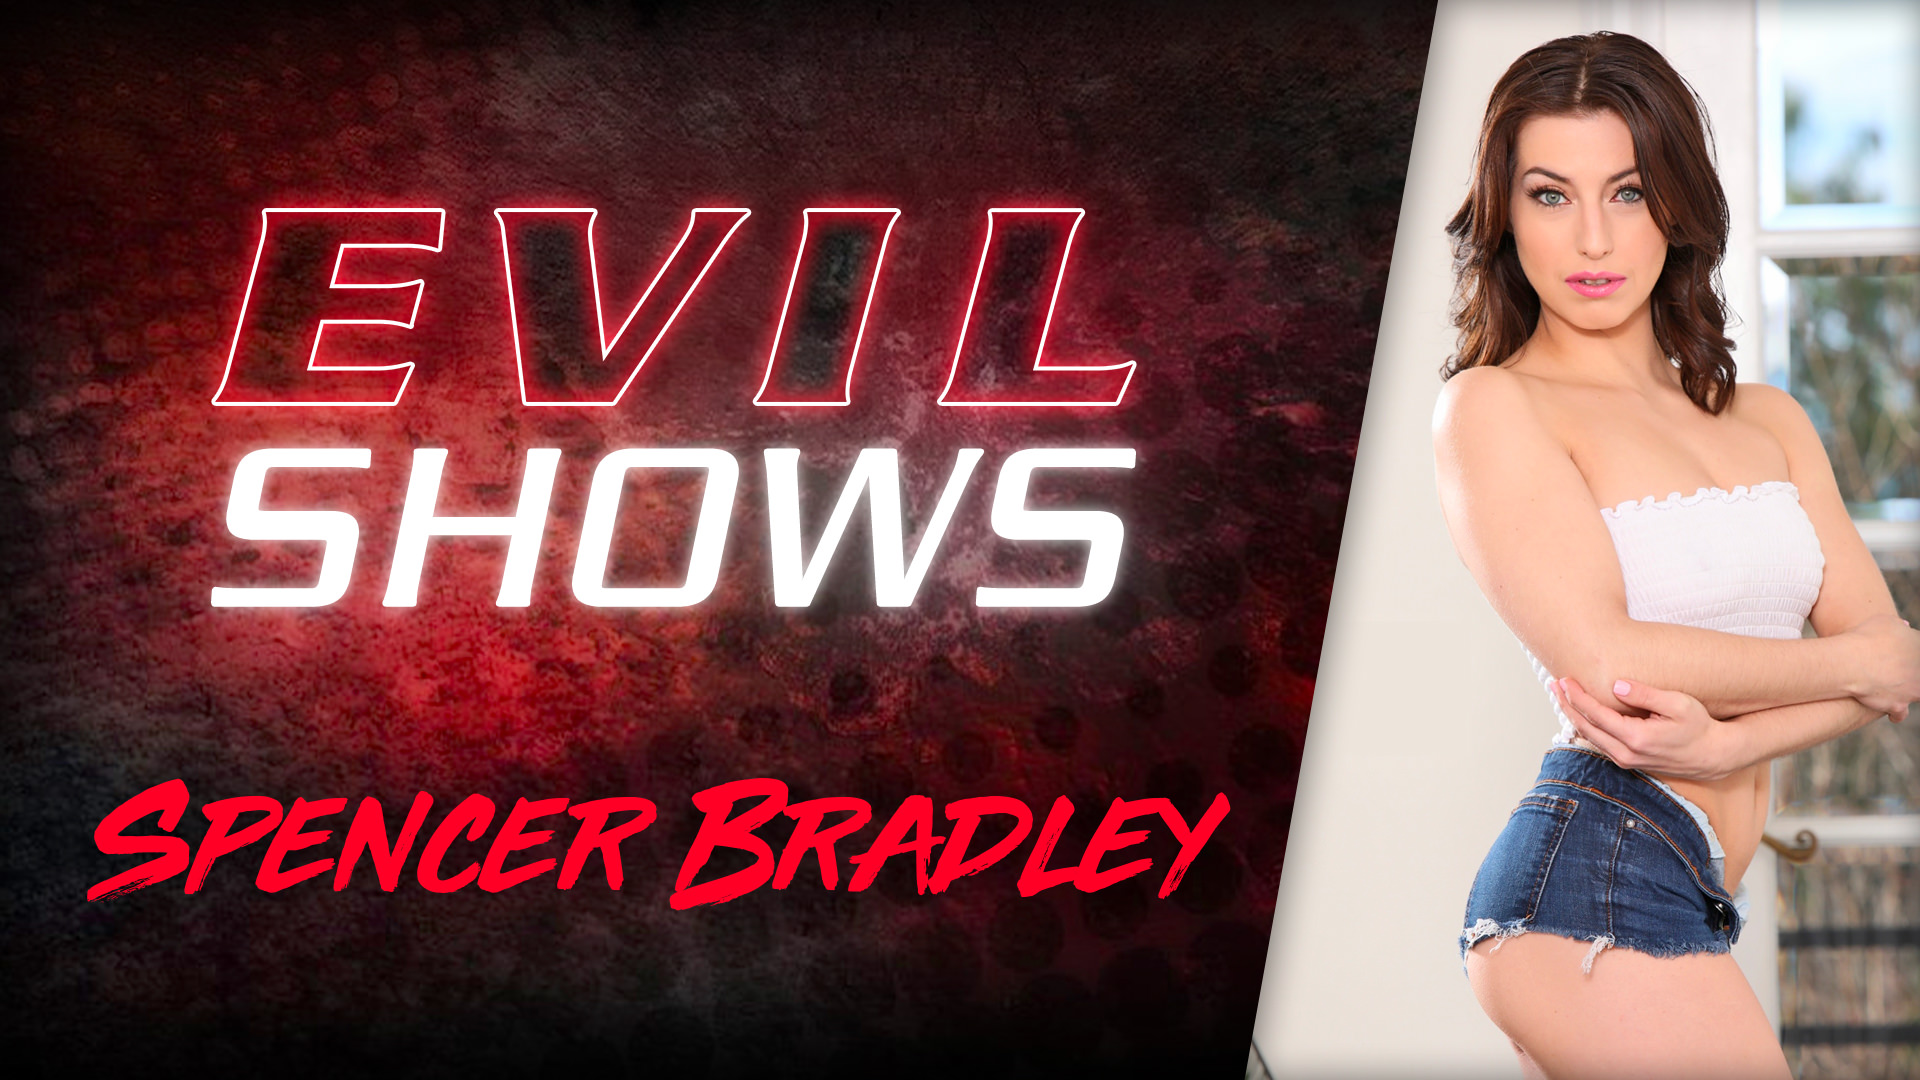 Evil shows spencer bradley spencer bradley Spencer Bradley